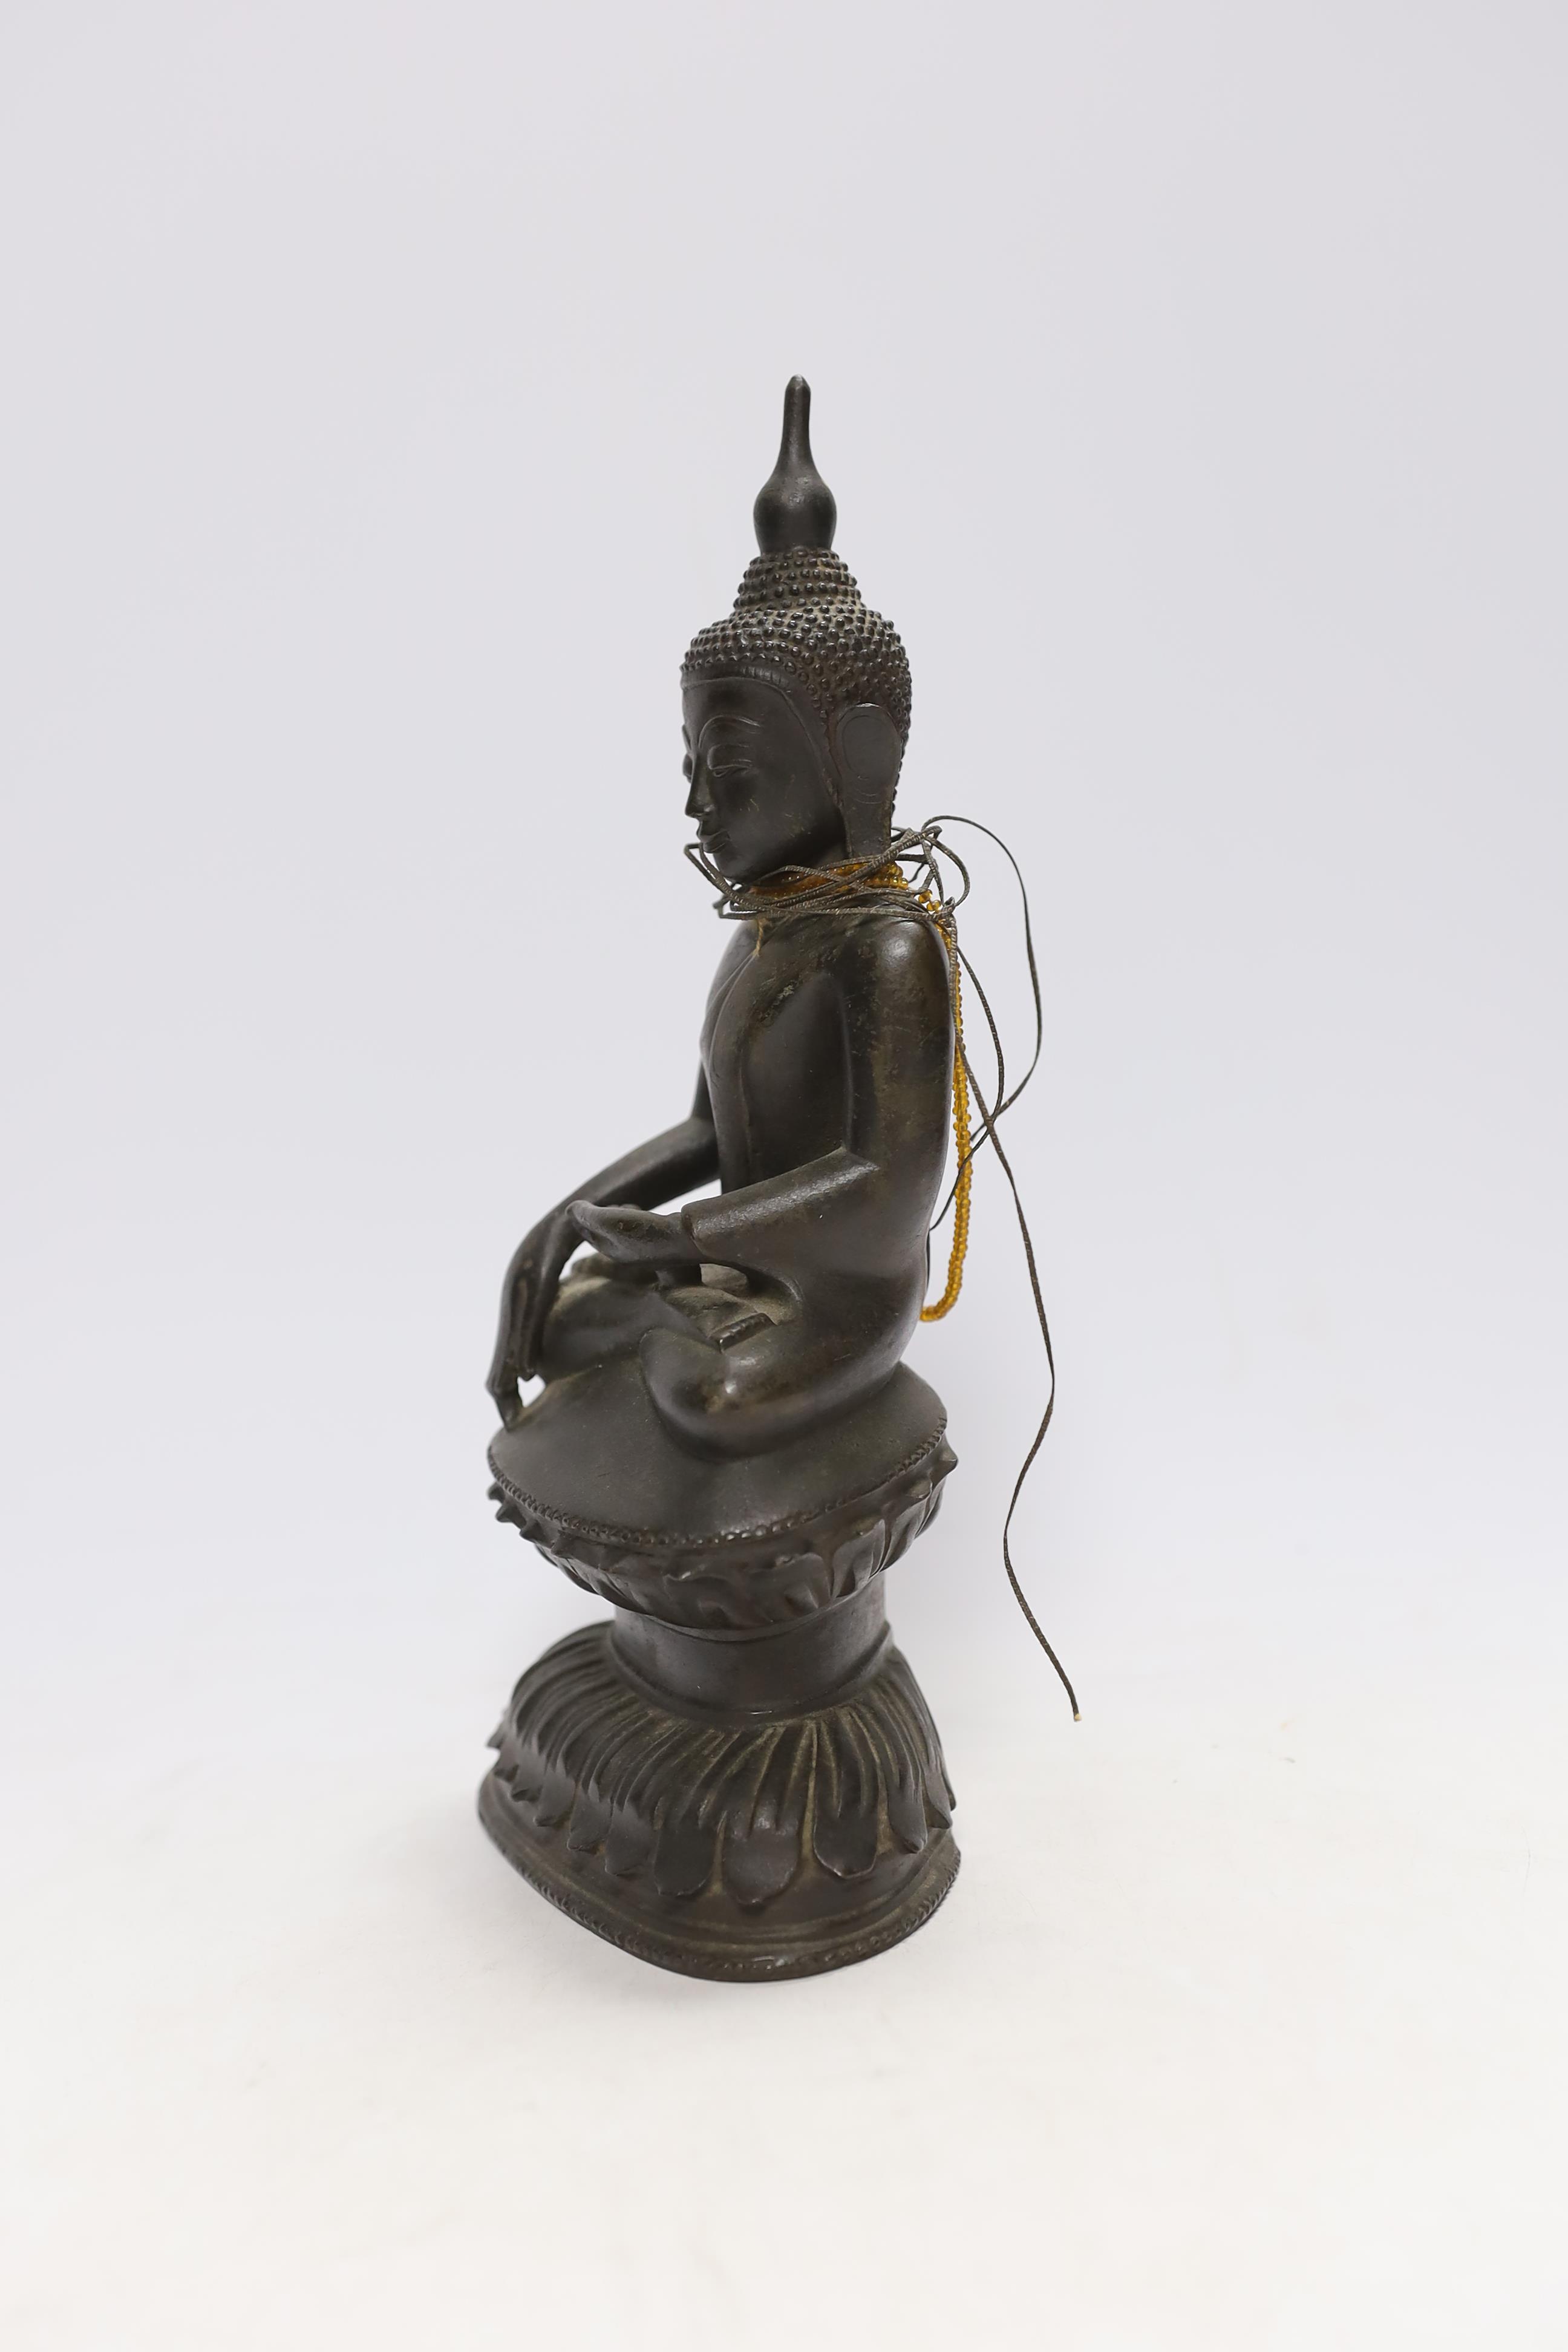 A 19th century Burmese bronze figure of Buddha, 26cm high - Image 3 of 5